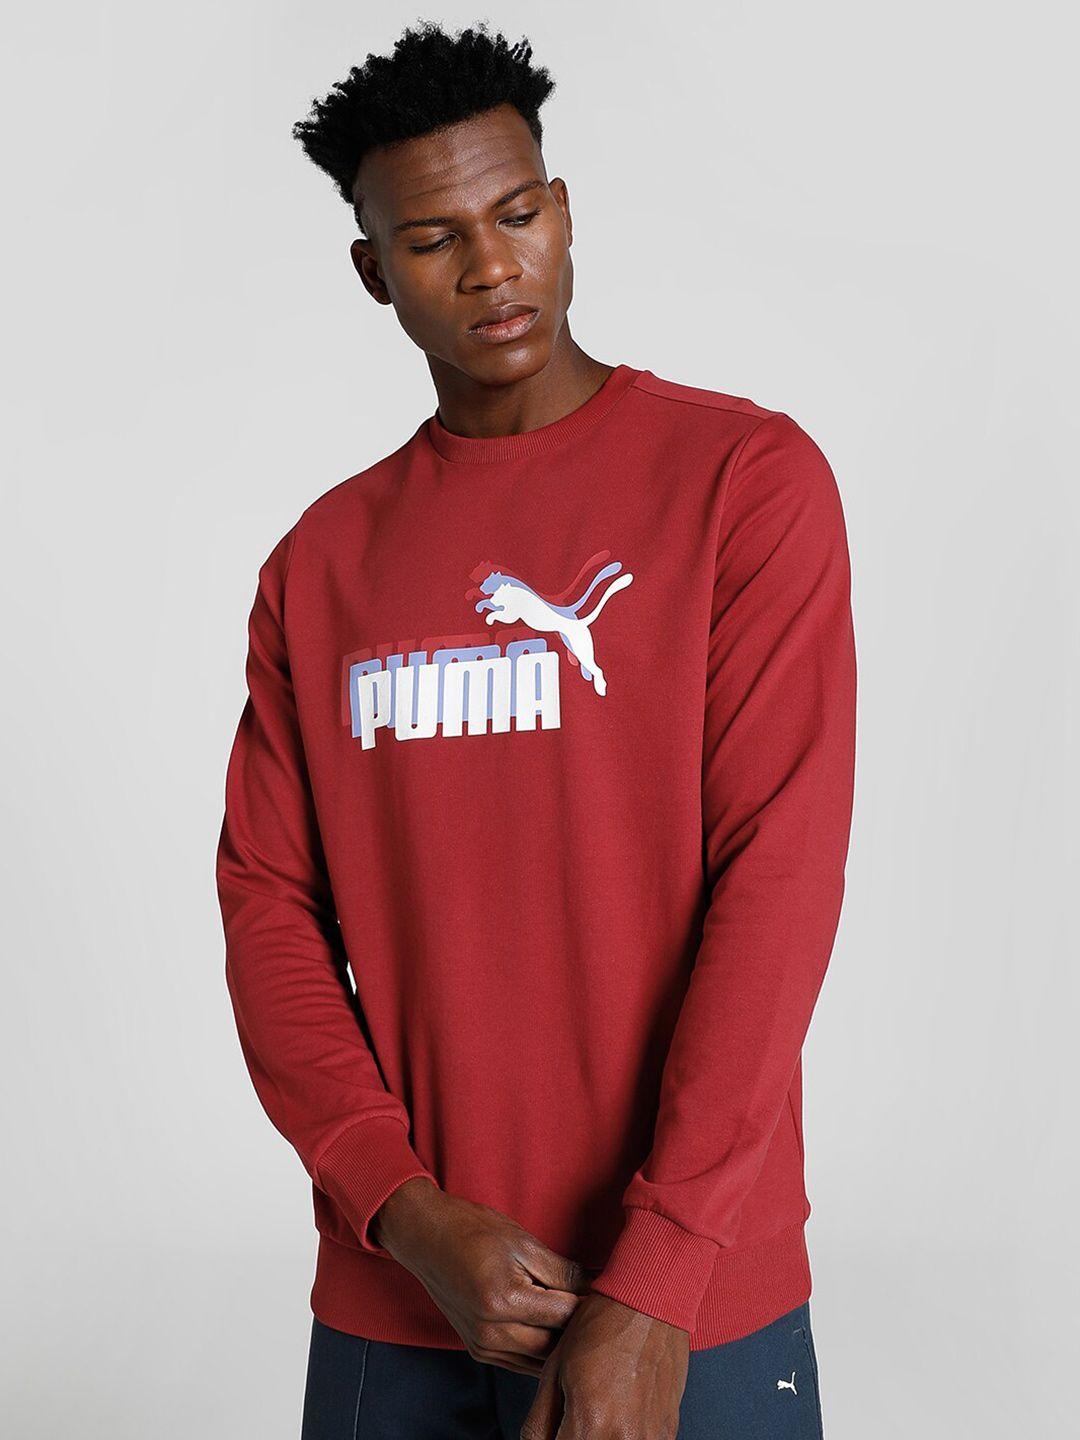 Puma Graphic Printed Cotton Sweatshirt